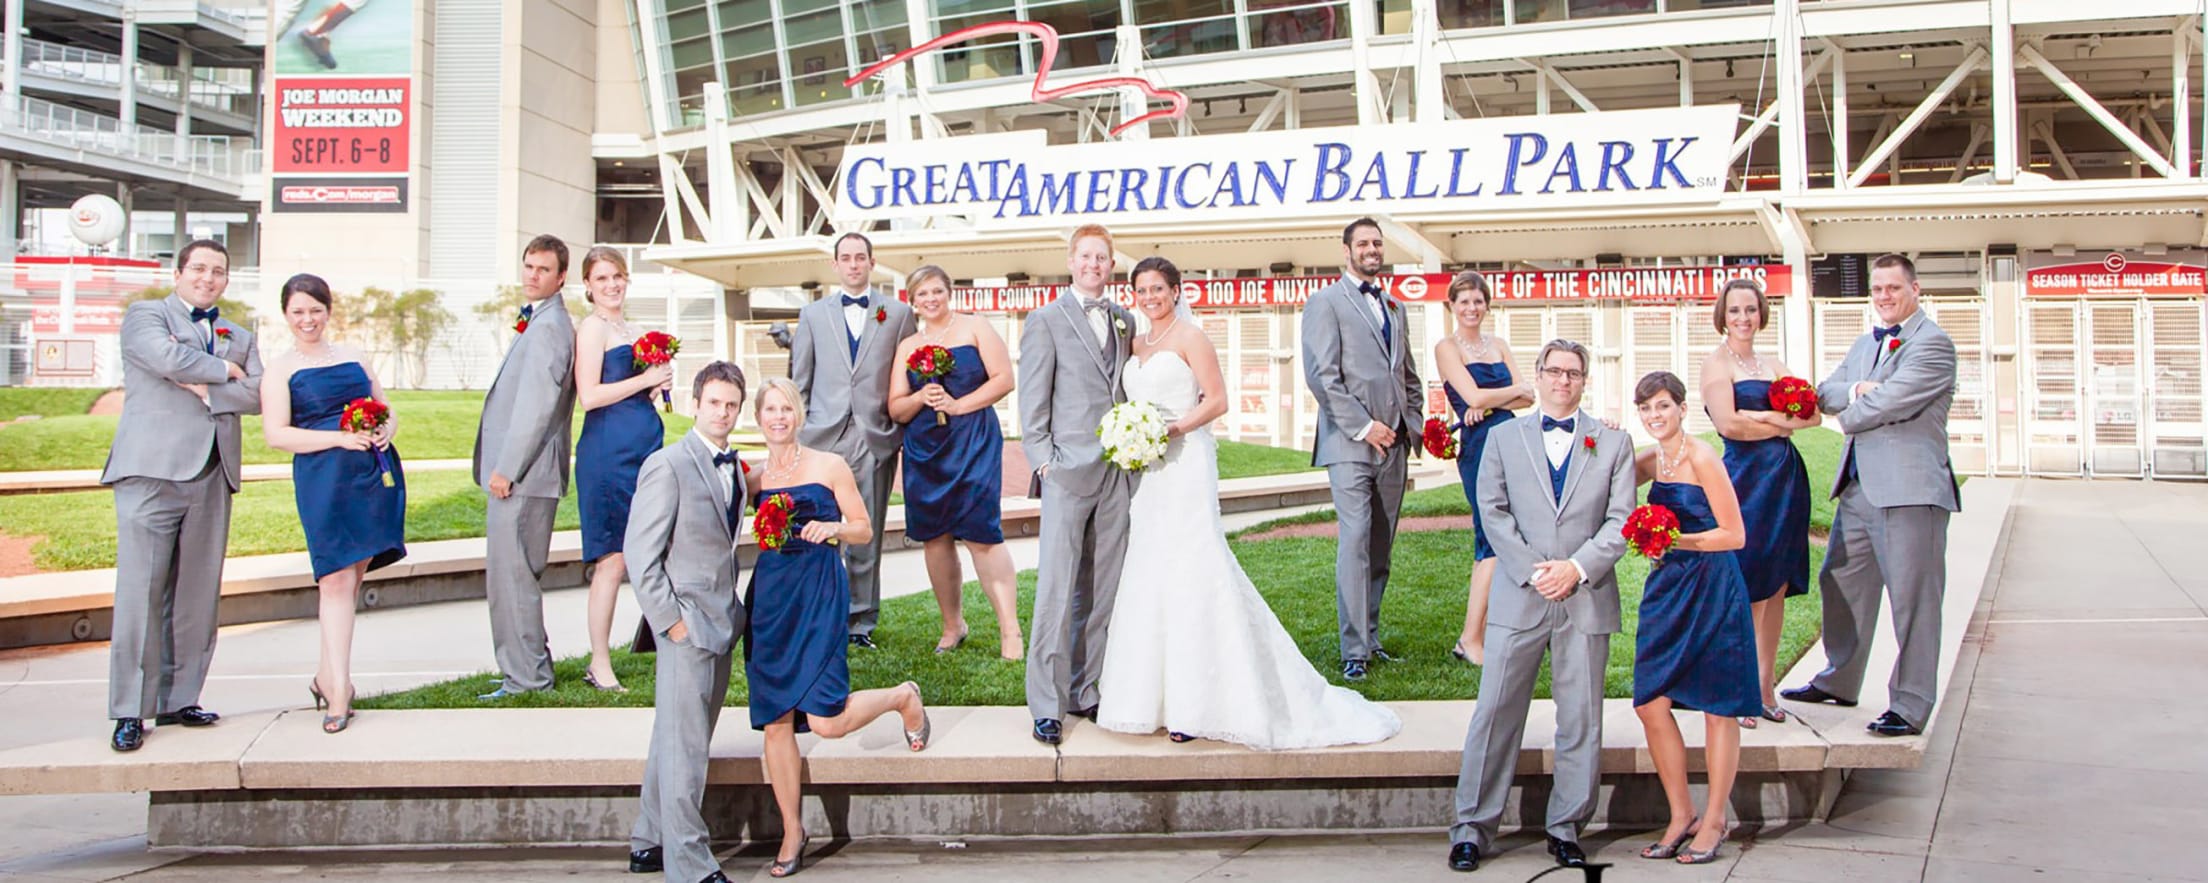 Great American Ball Park - Venue - Cincinnati, OH - WeddingWire